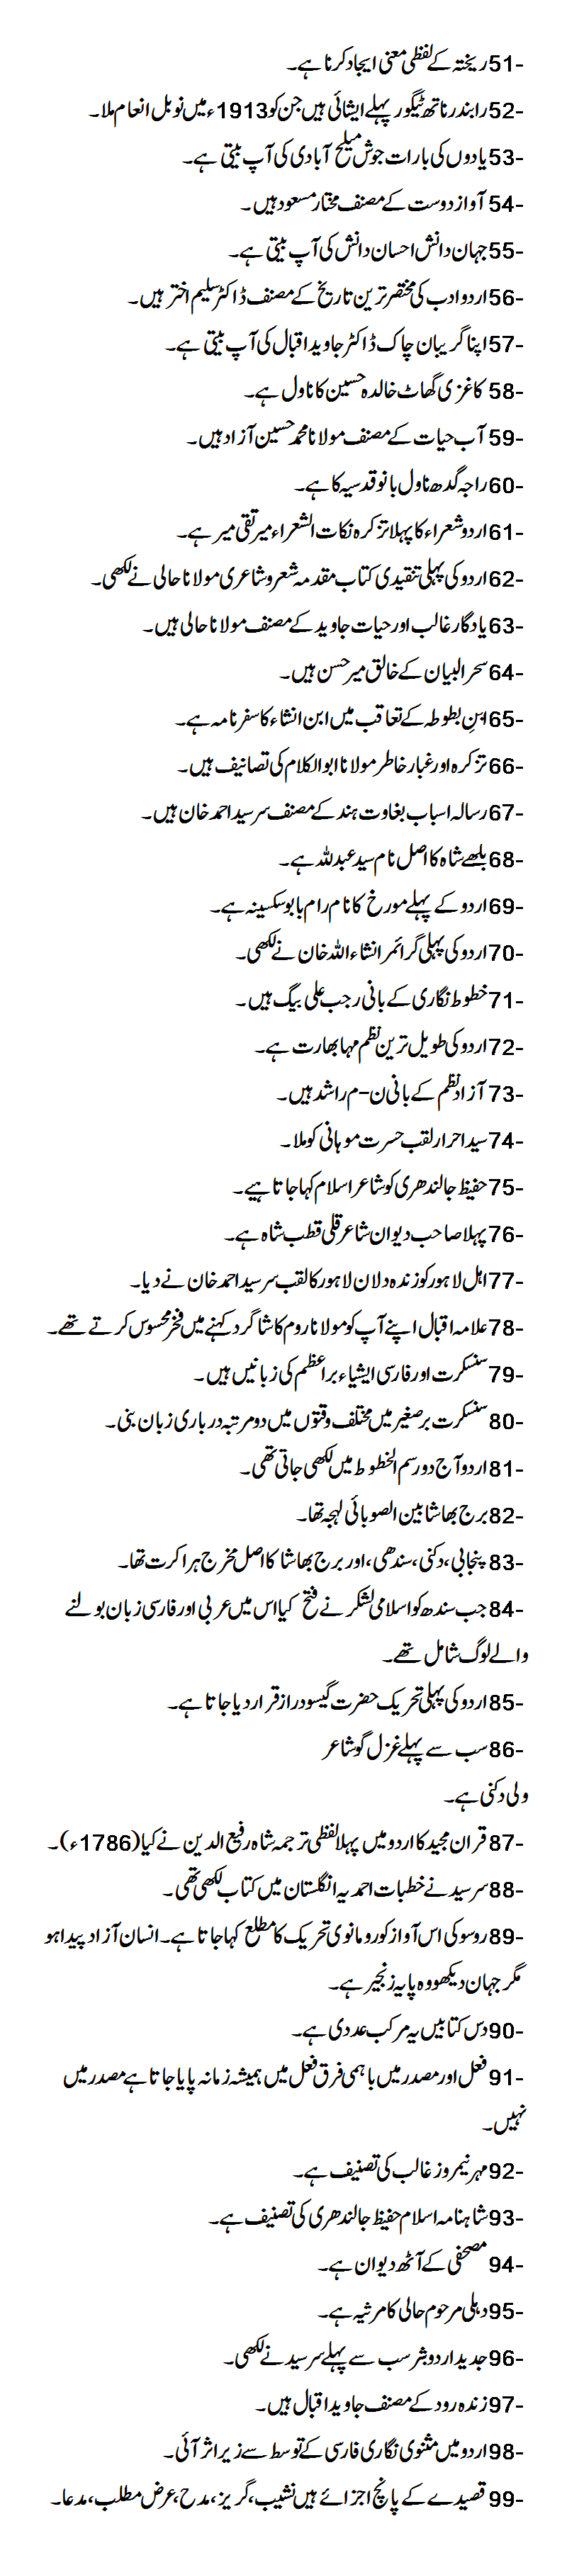 Important information about Urdu